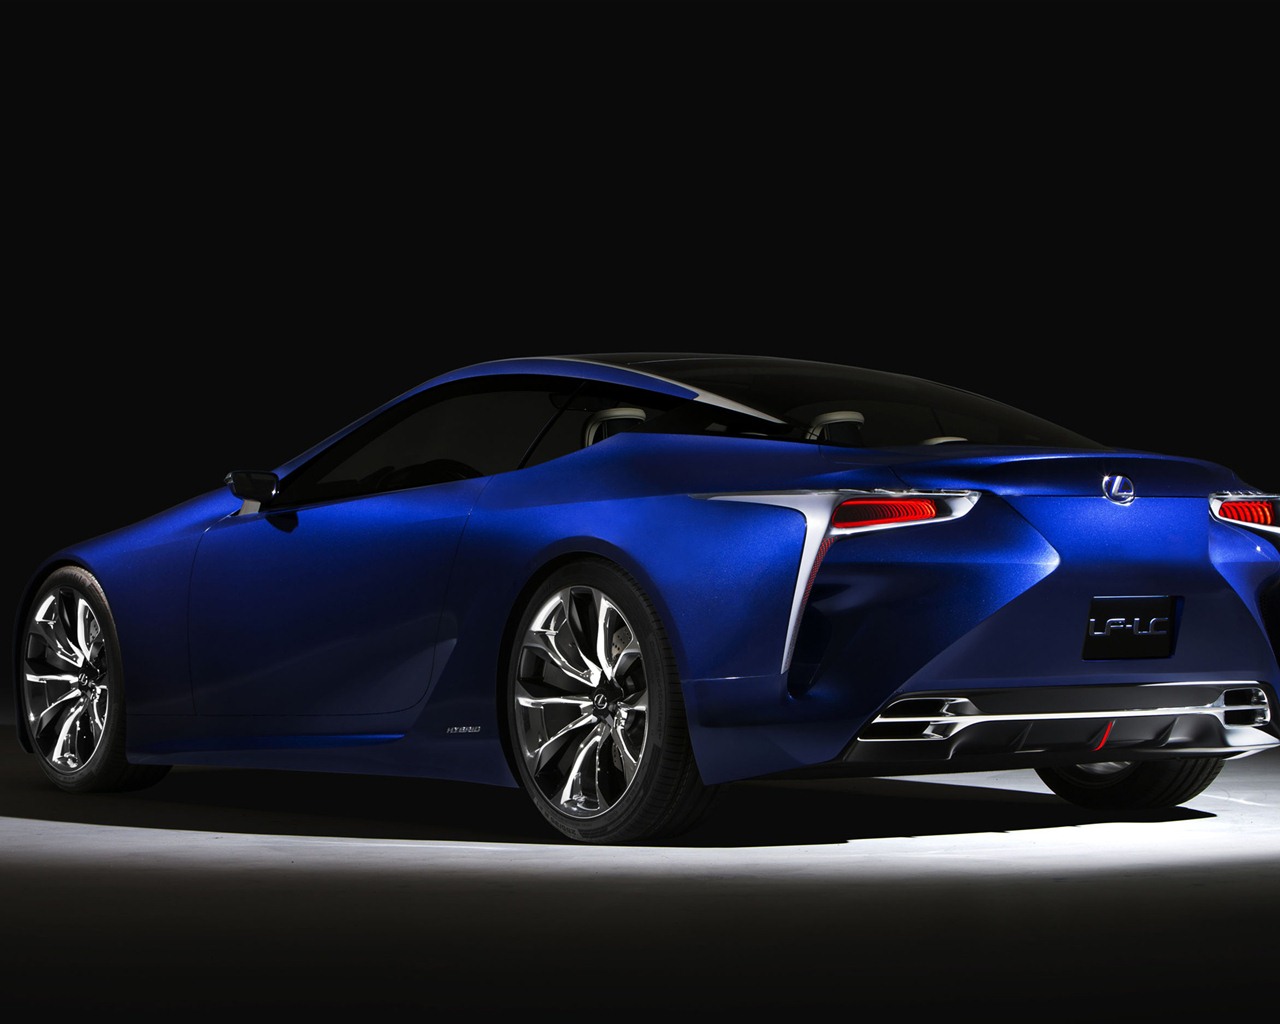 2012 Lexus LF-LC Blue concept 雷克萨斯 蓝色概念车 高清壁纸9 - 1280x1024